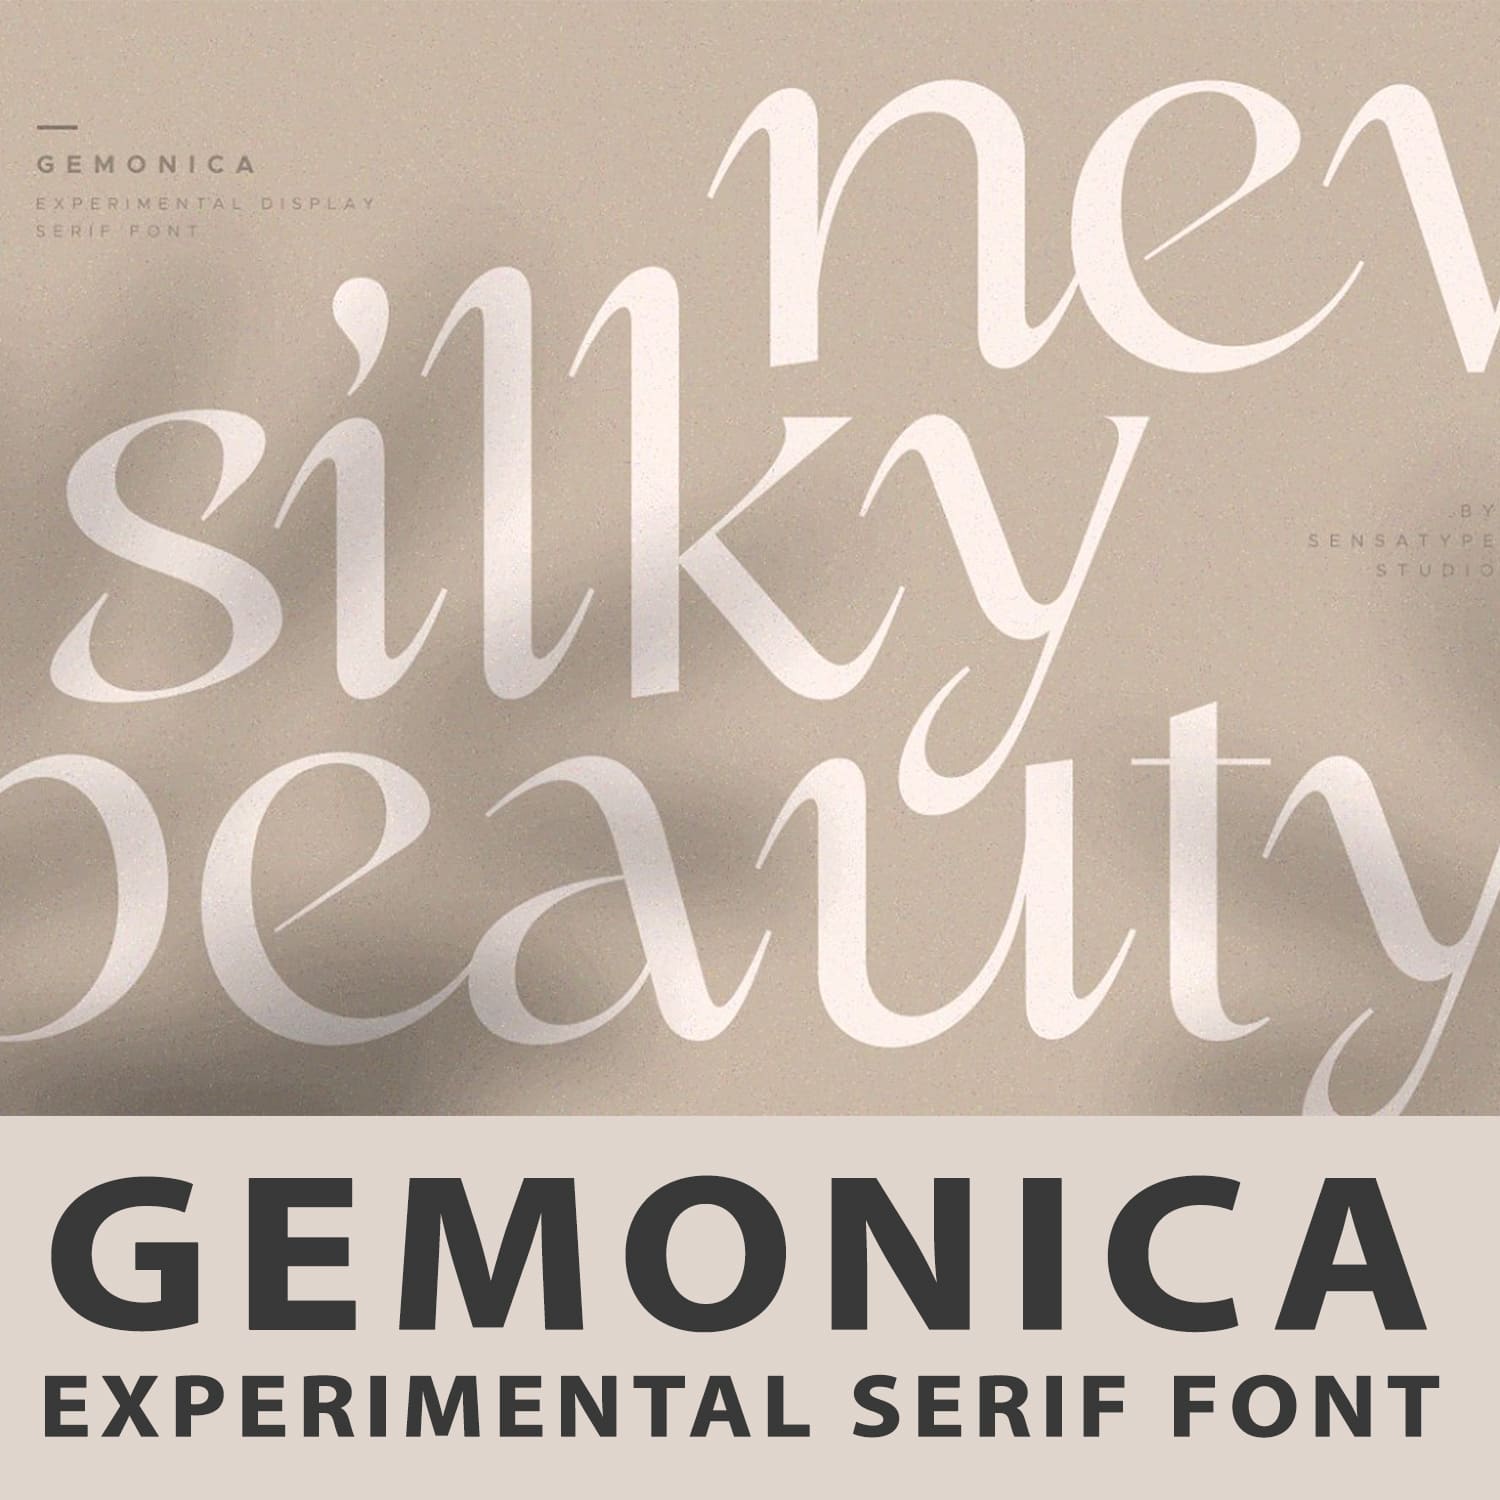 Gemonica - experimental serif font main cover.